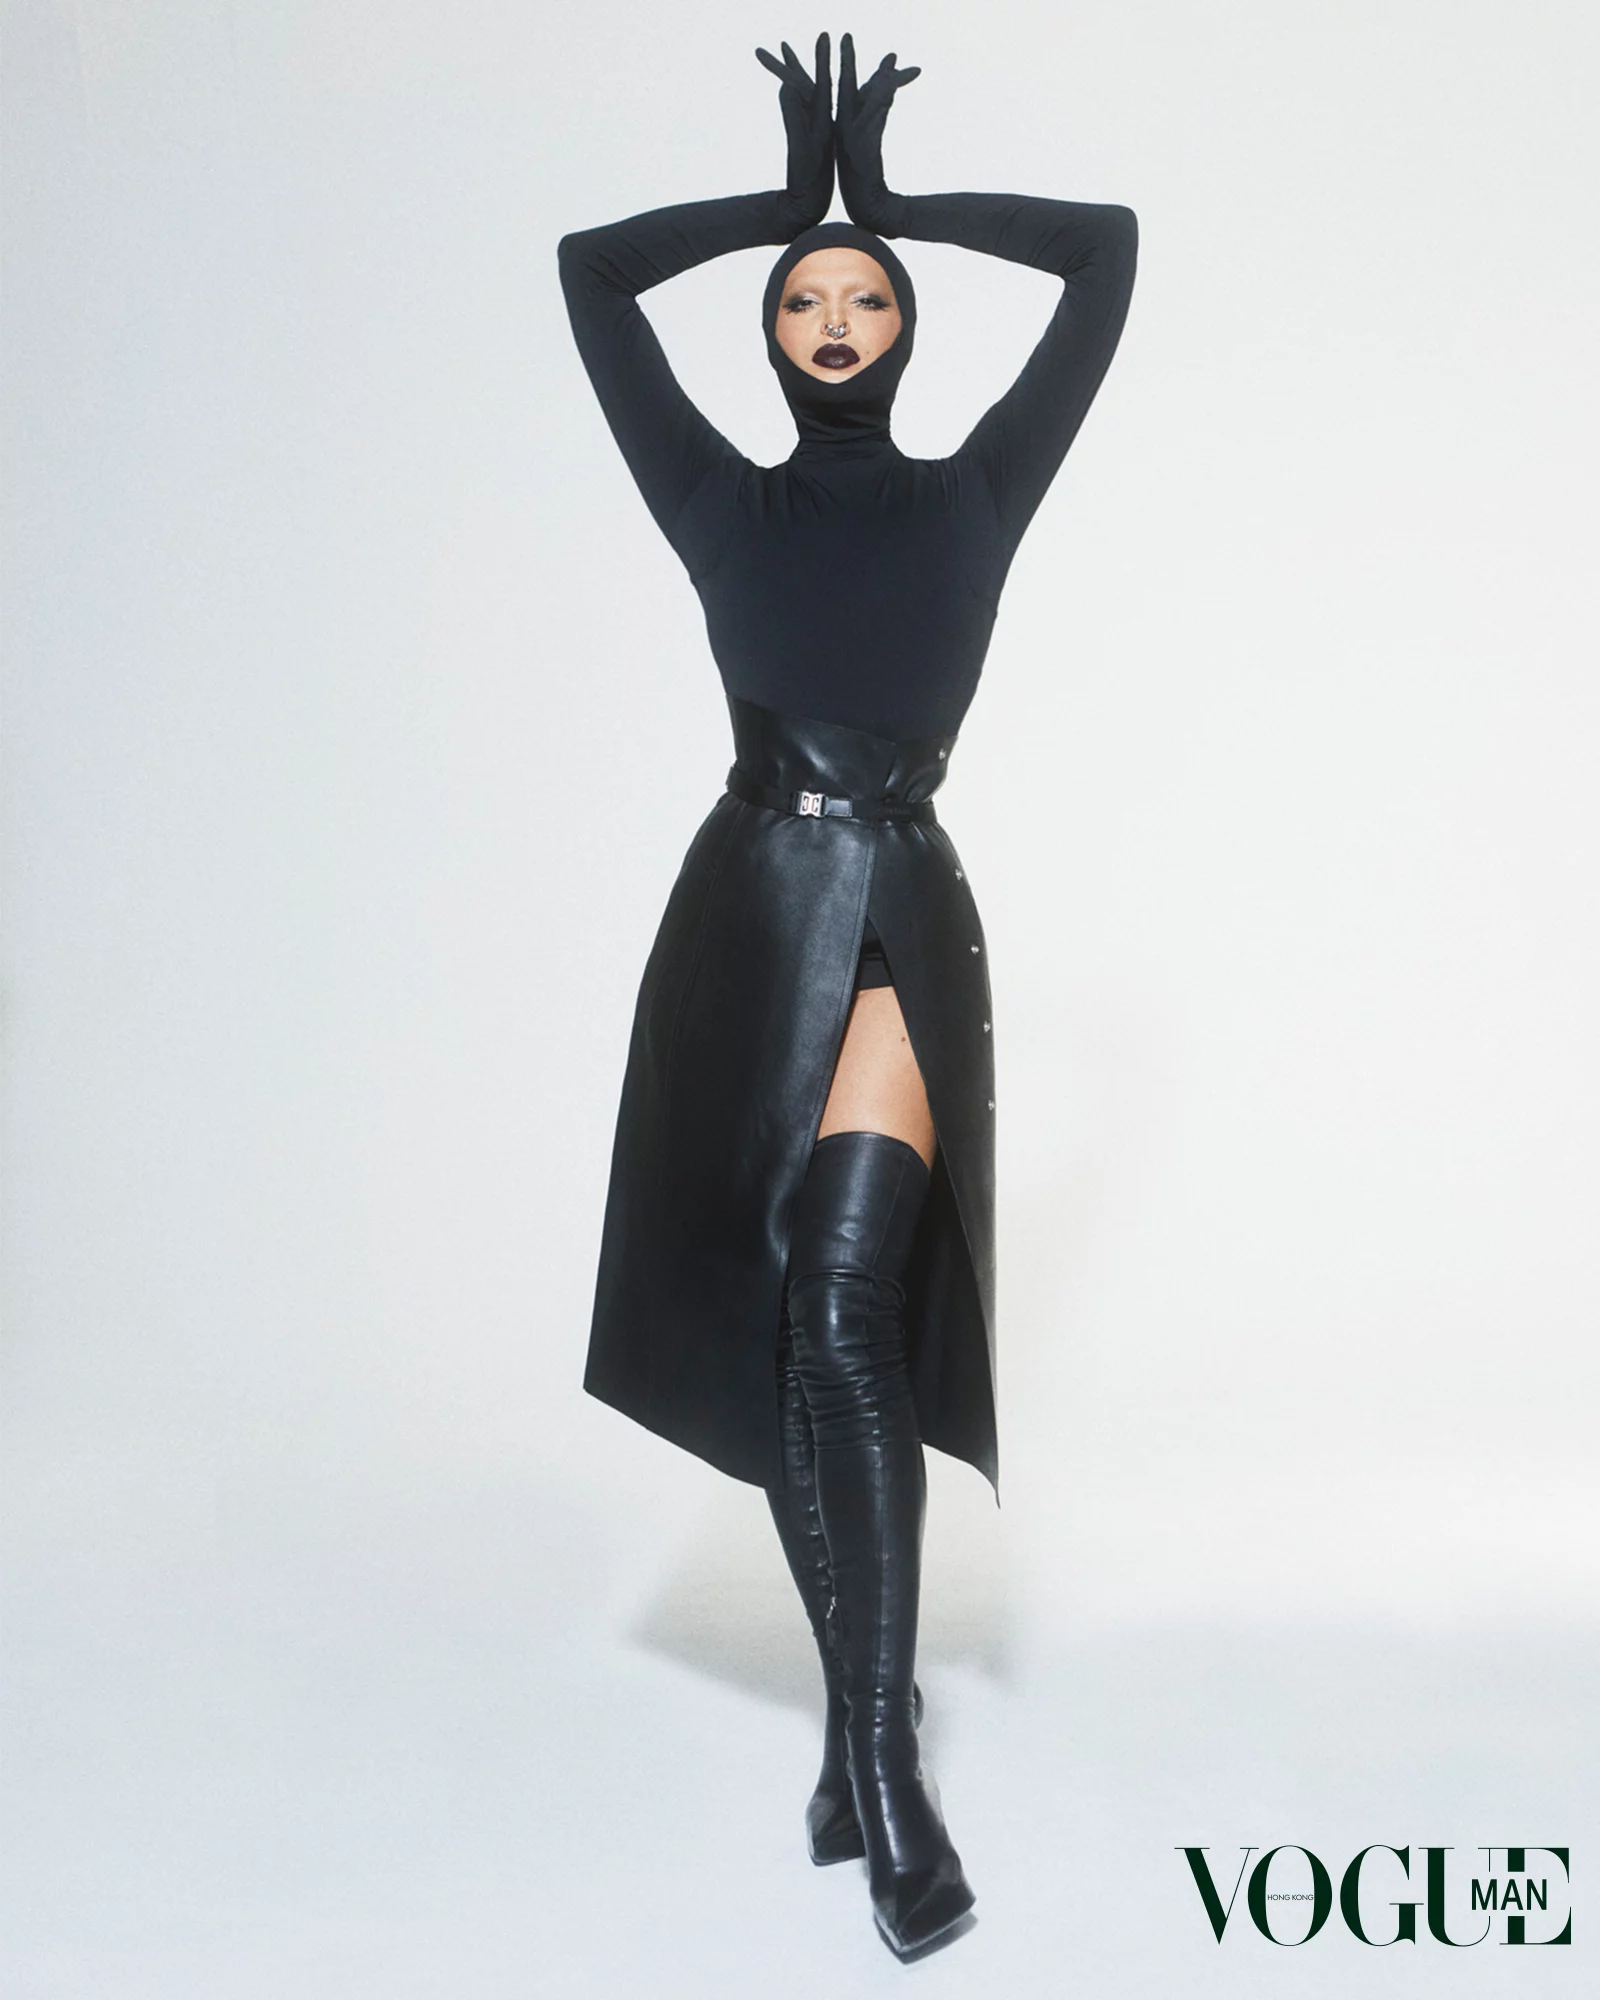 Valentina for Vogue Hongkong 1 by Sergi PONS